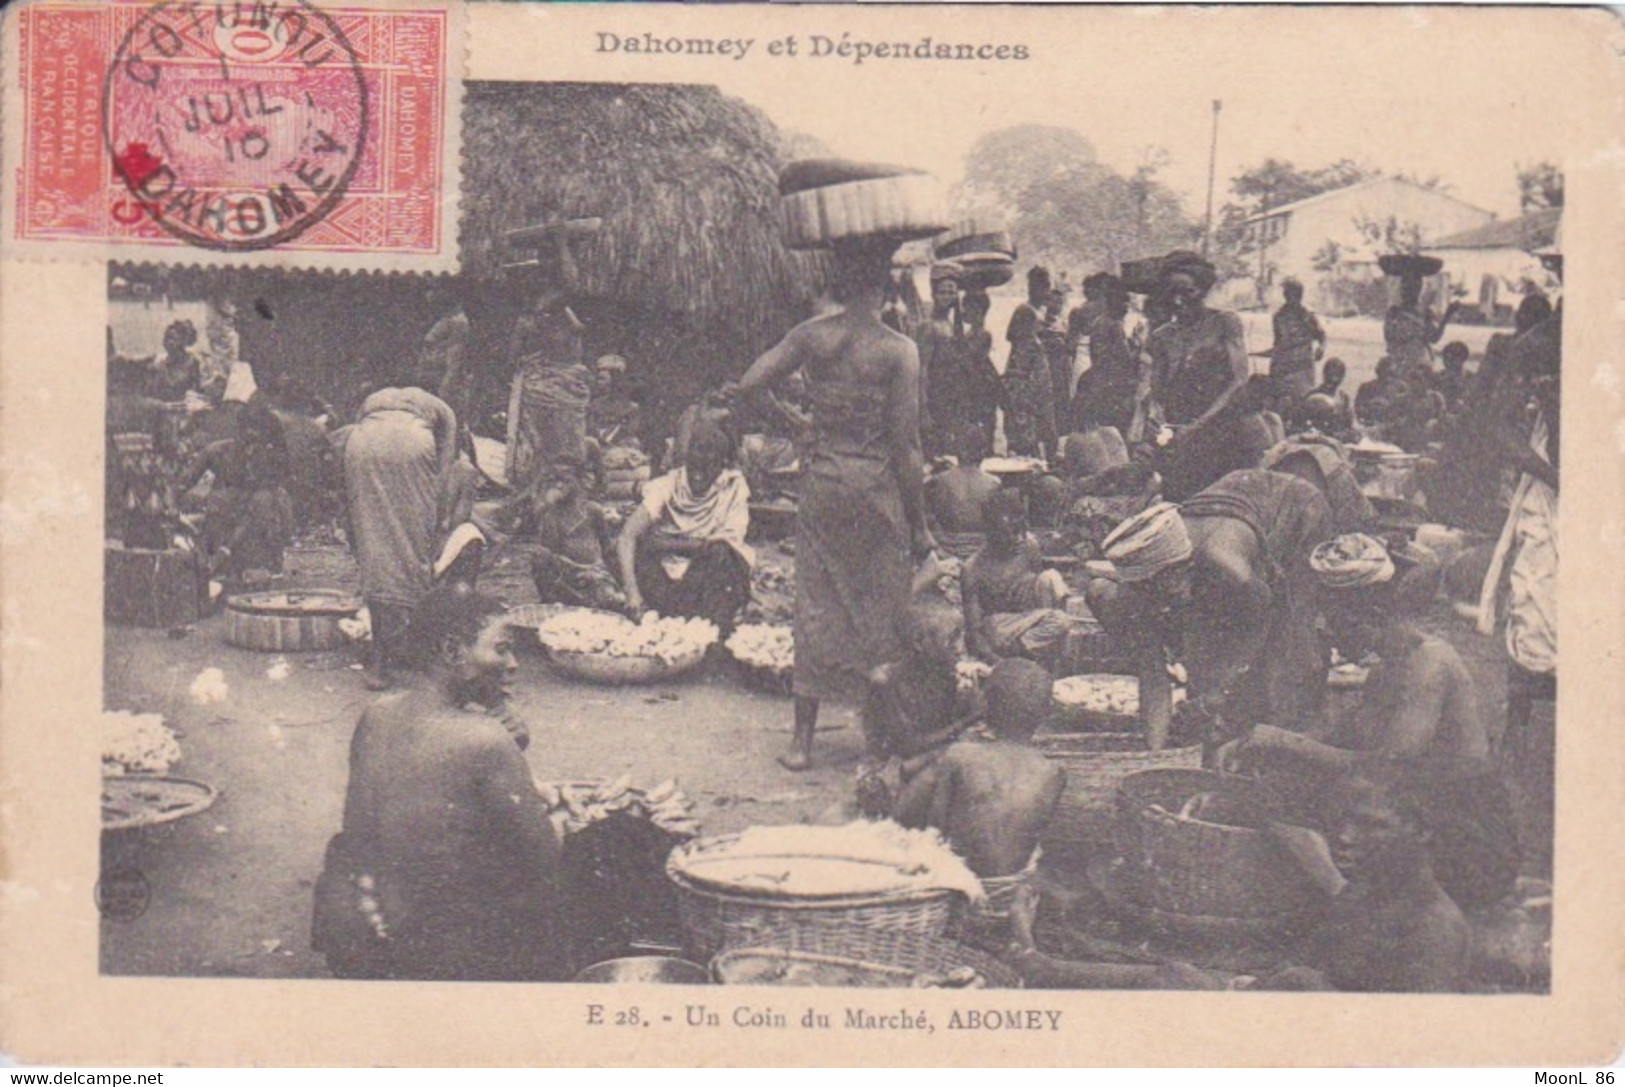 DAHOMEY ET DEPENDANCES - UN COIN DU MARCHE ABOMEY - TIMBRE COTONOU 1910  AOF - Dahomey